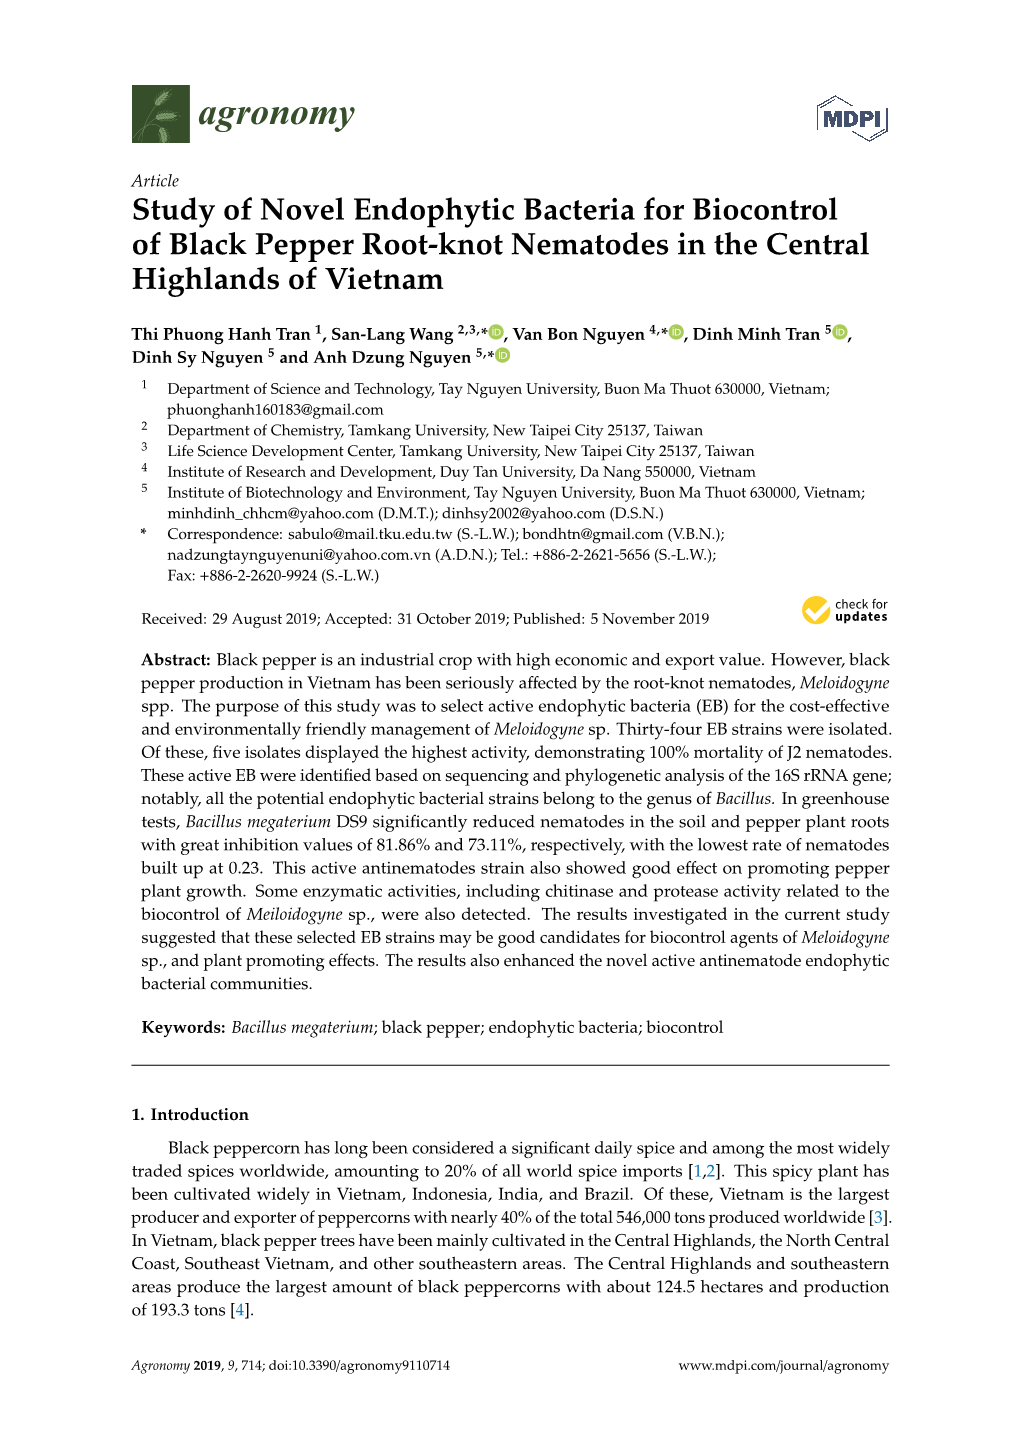 Study of Novel Endophytic Bacteria for Biocontrol of Black Pepper Root-Knot Nematodes in the Central Highlands of Vietnam